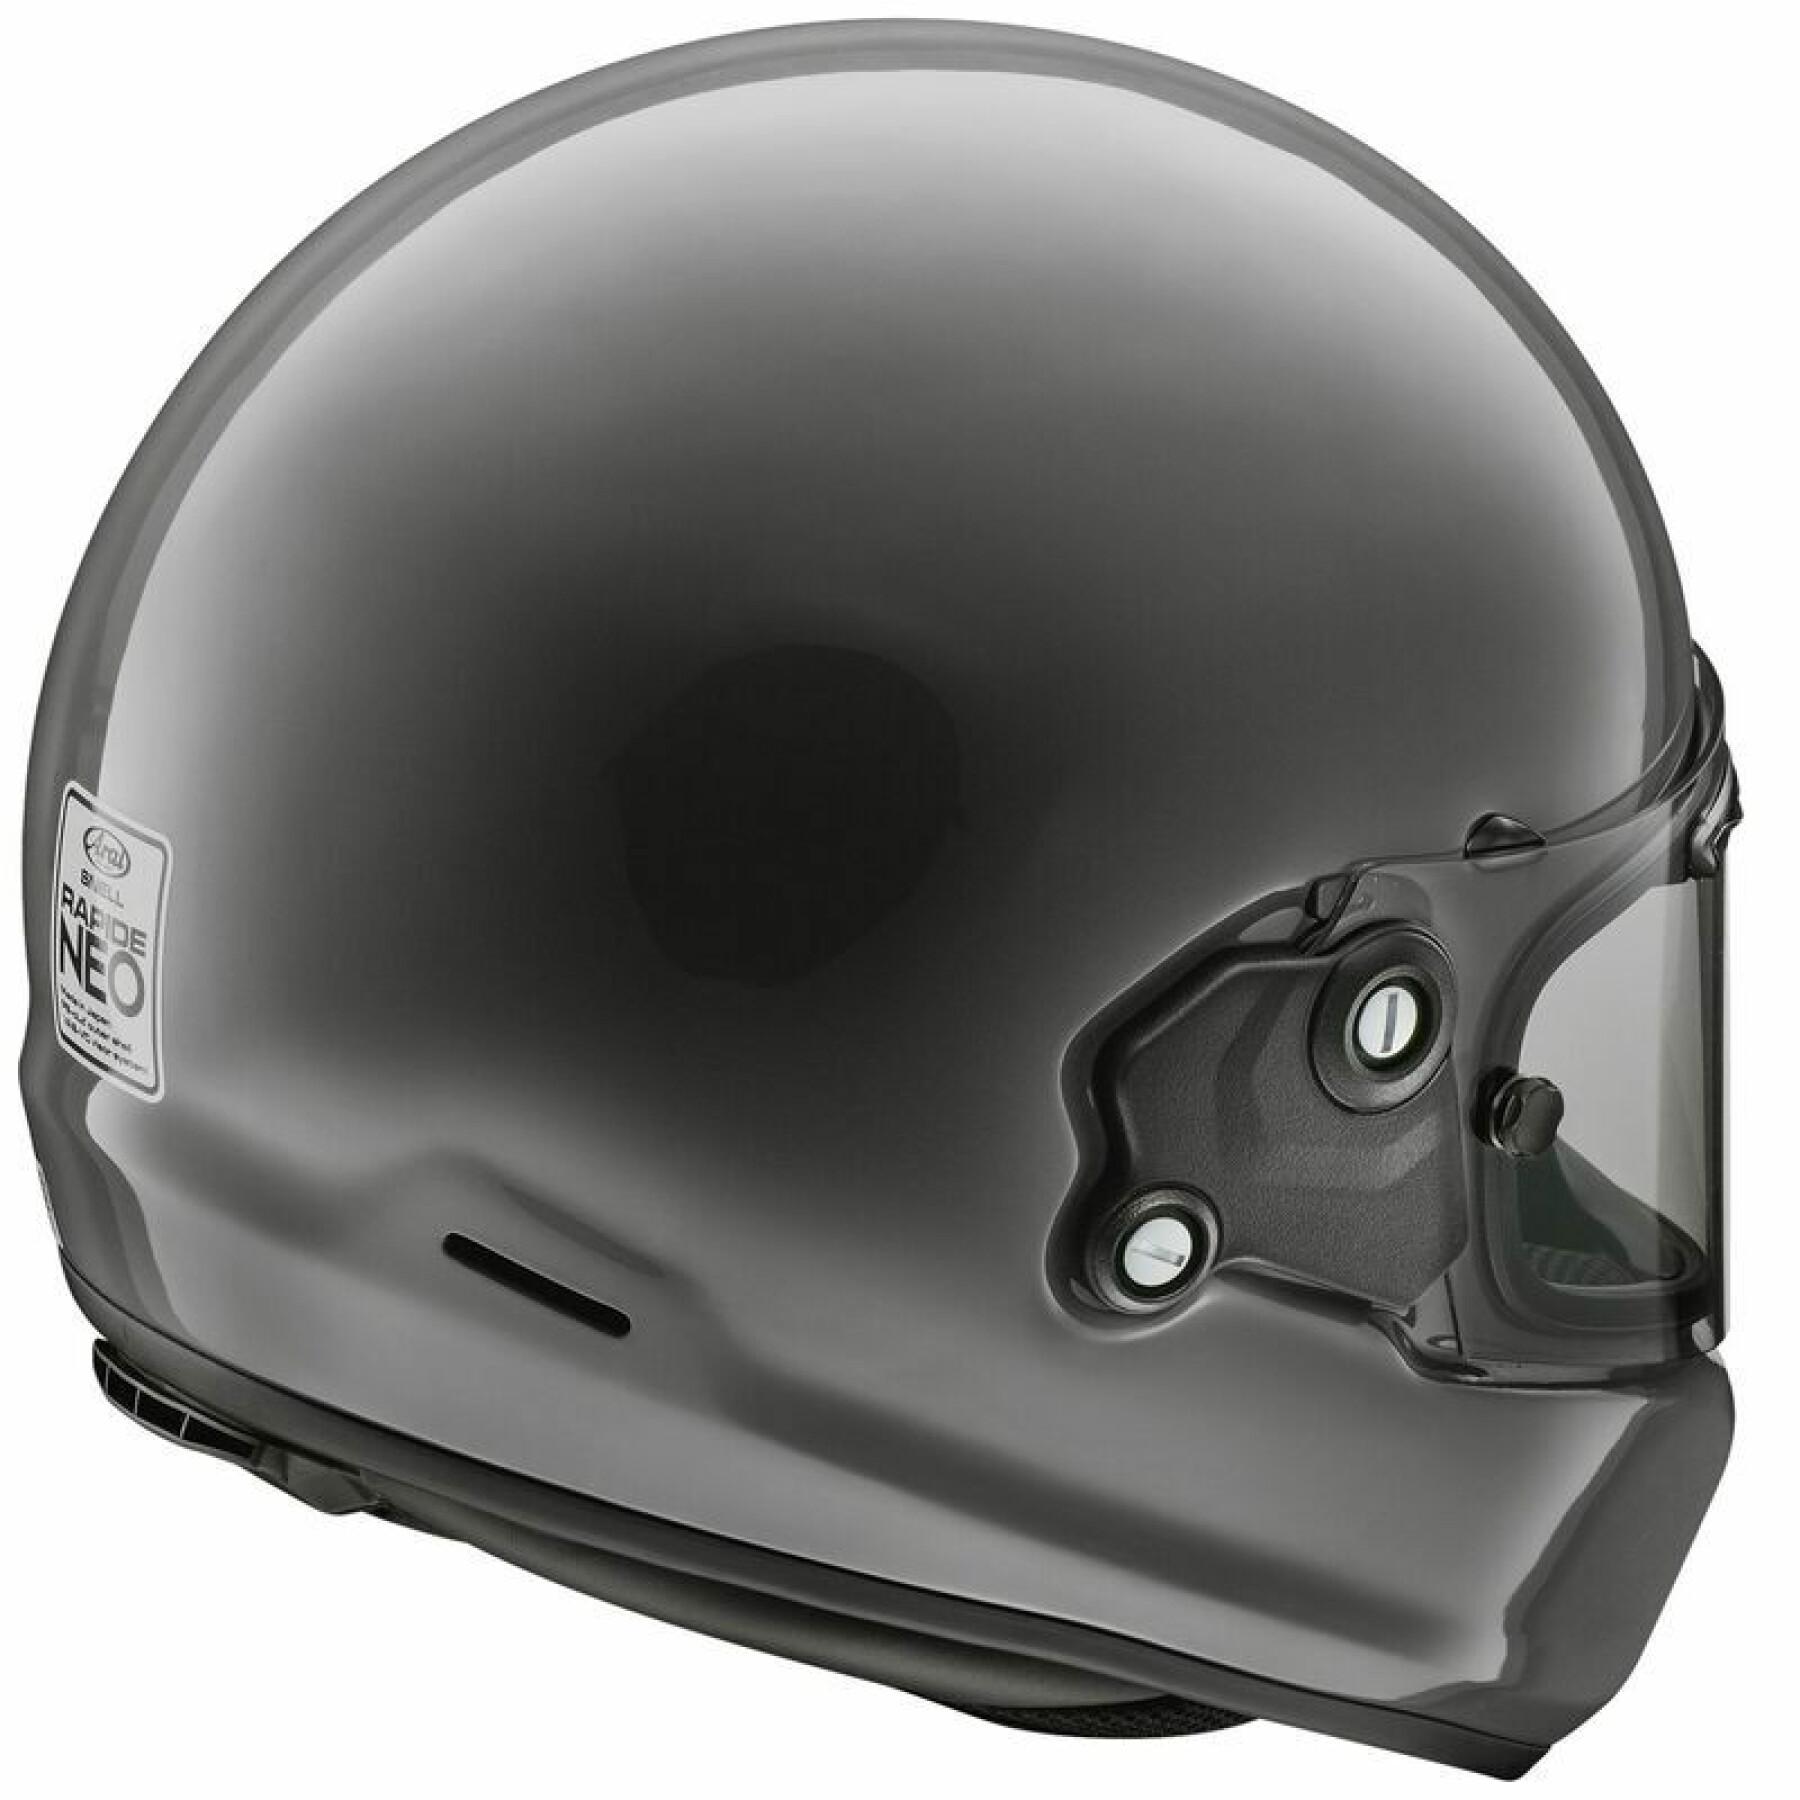 Full face motorcycle helmet Arai Concept-X Modern